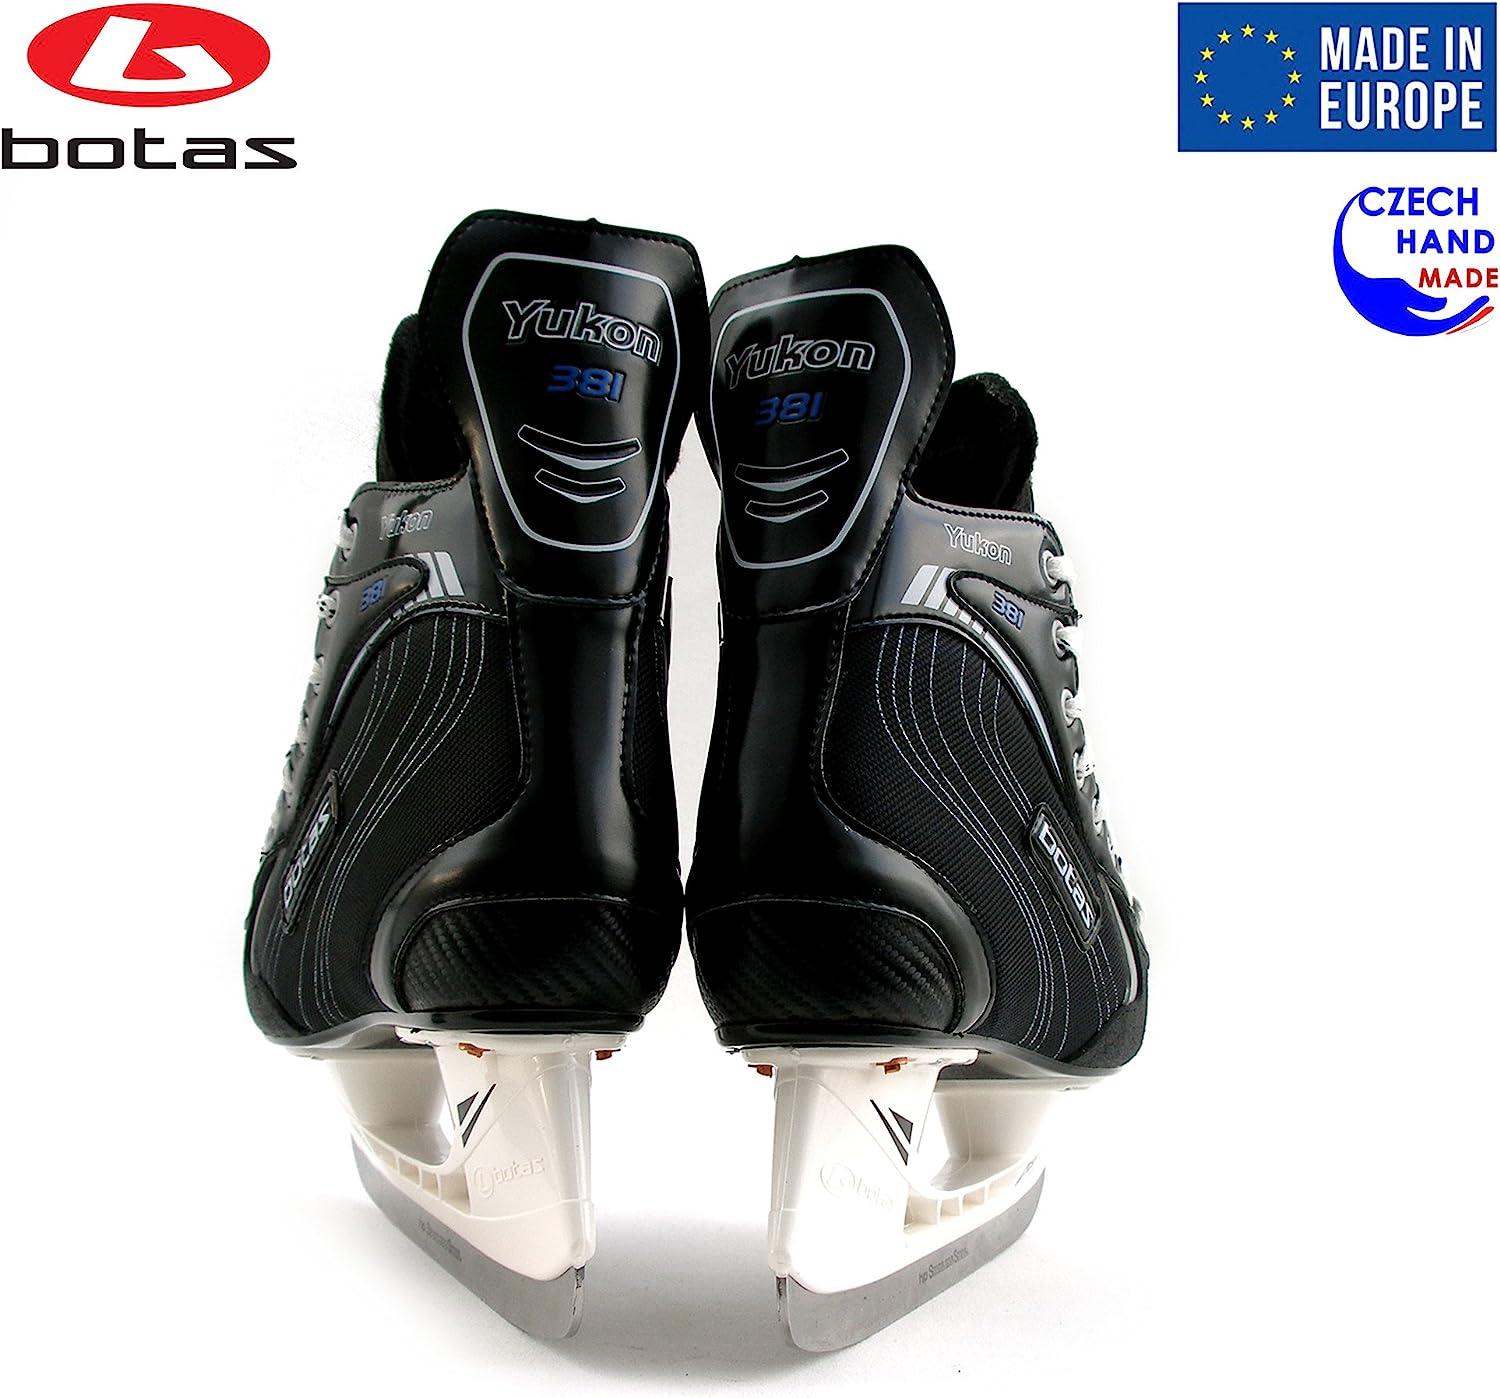 Botas - Yukon 381 - Men's Ice Hockey Skates, Made in Europe (Czech  Republic)